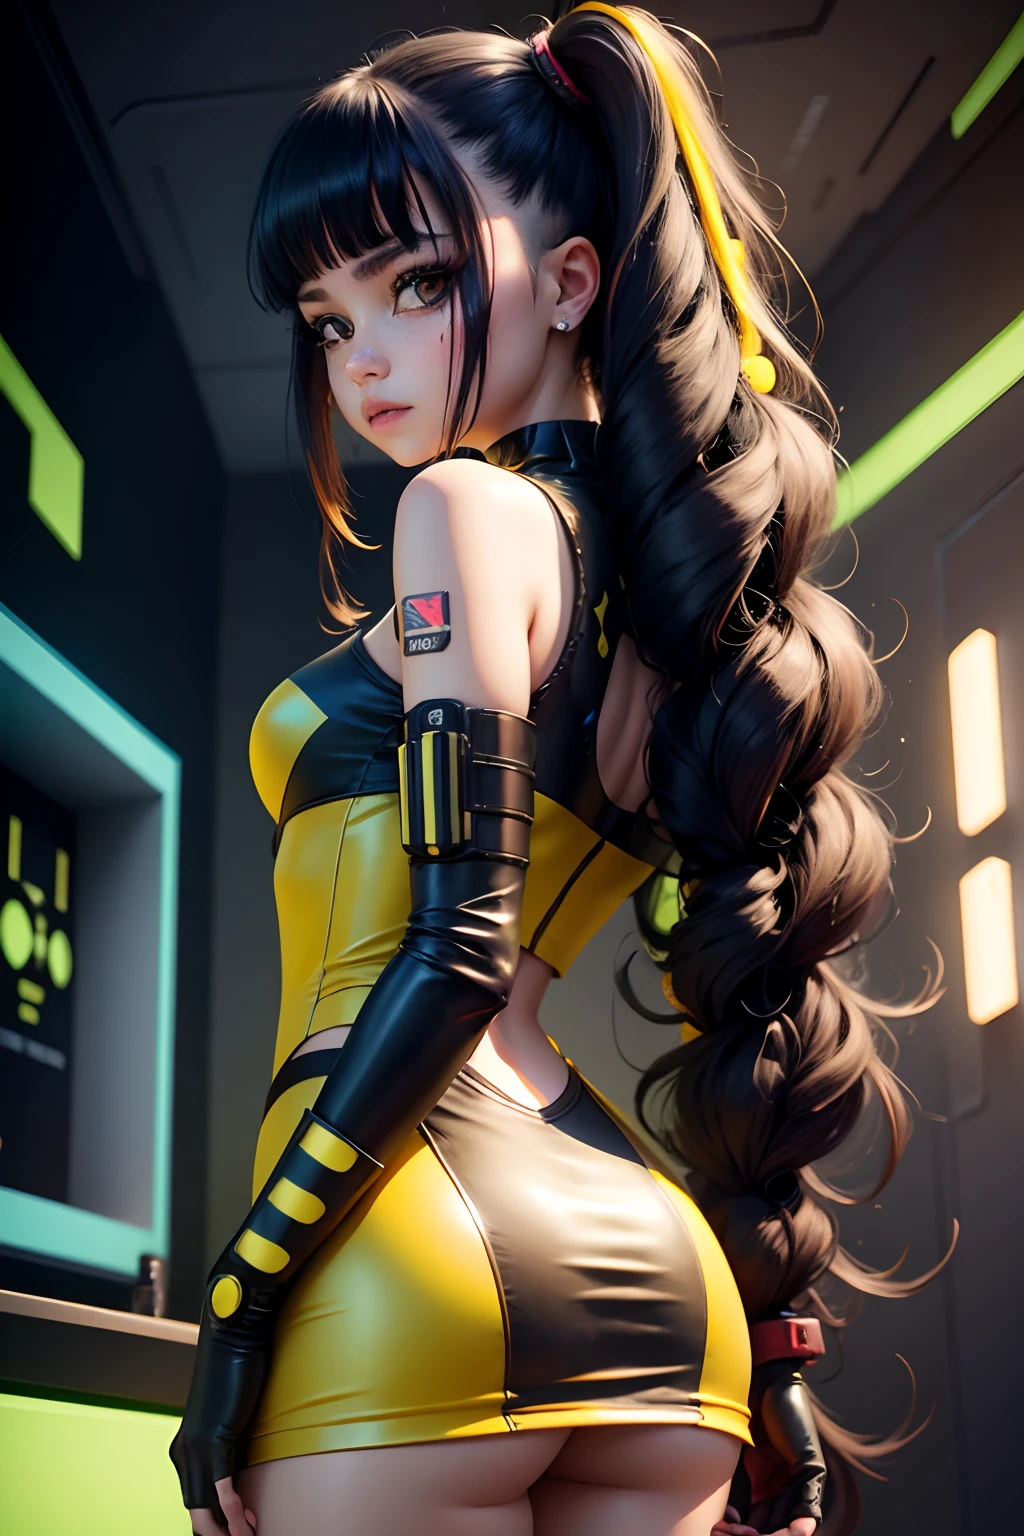 chica con vestido amarillo cyberpunk , medio futurista, mixto de gran mancha de mariquita, pelo largo negro